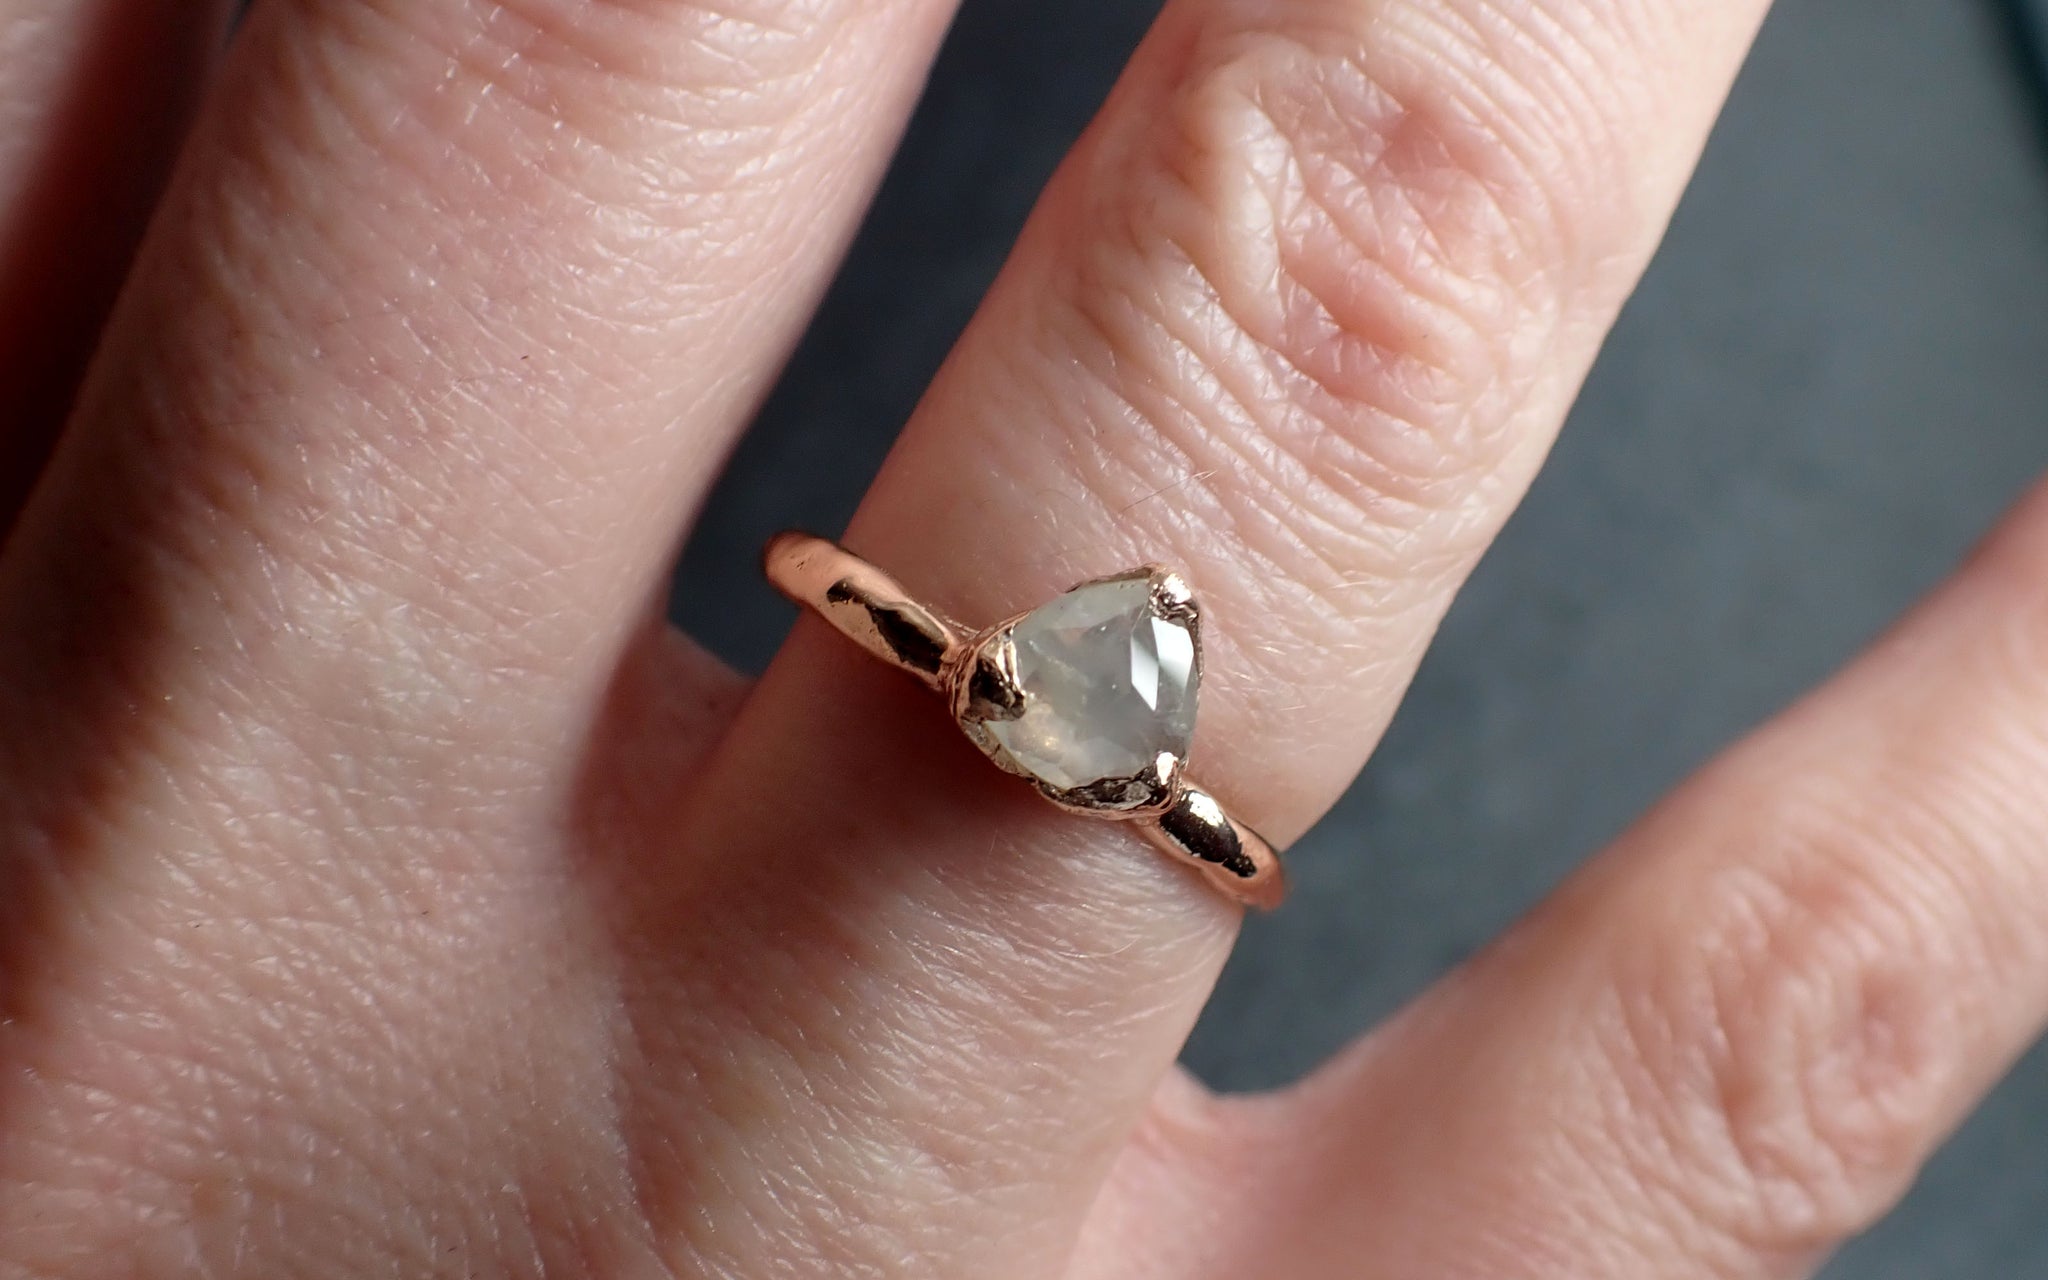 Fancy cut white Diamond Solitaire Engagement 14k Rose Gold Wedding Ring byAngeline 2781